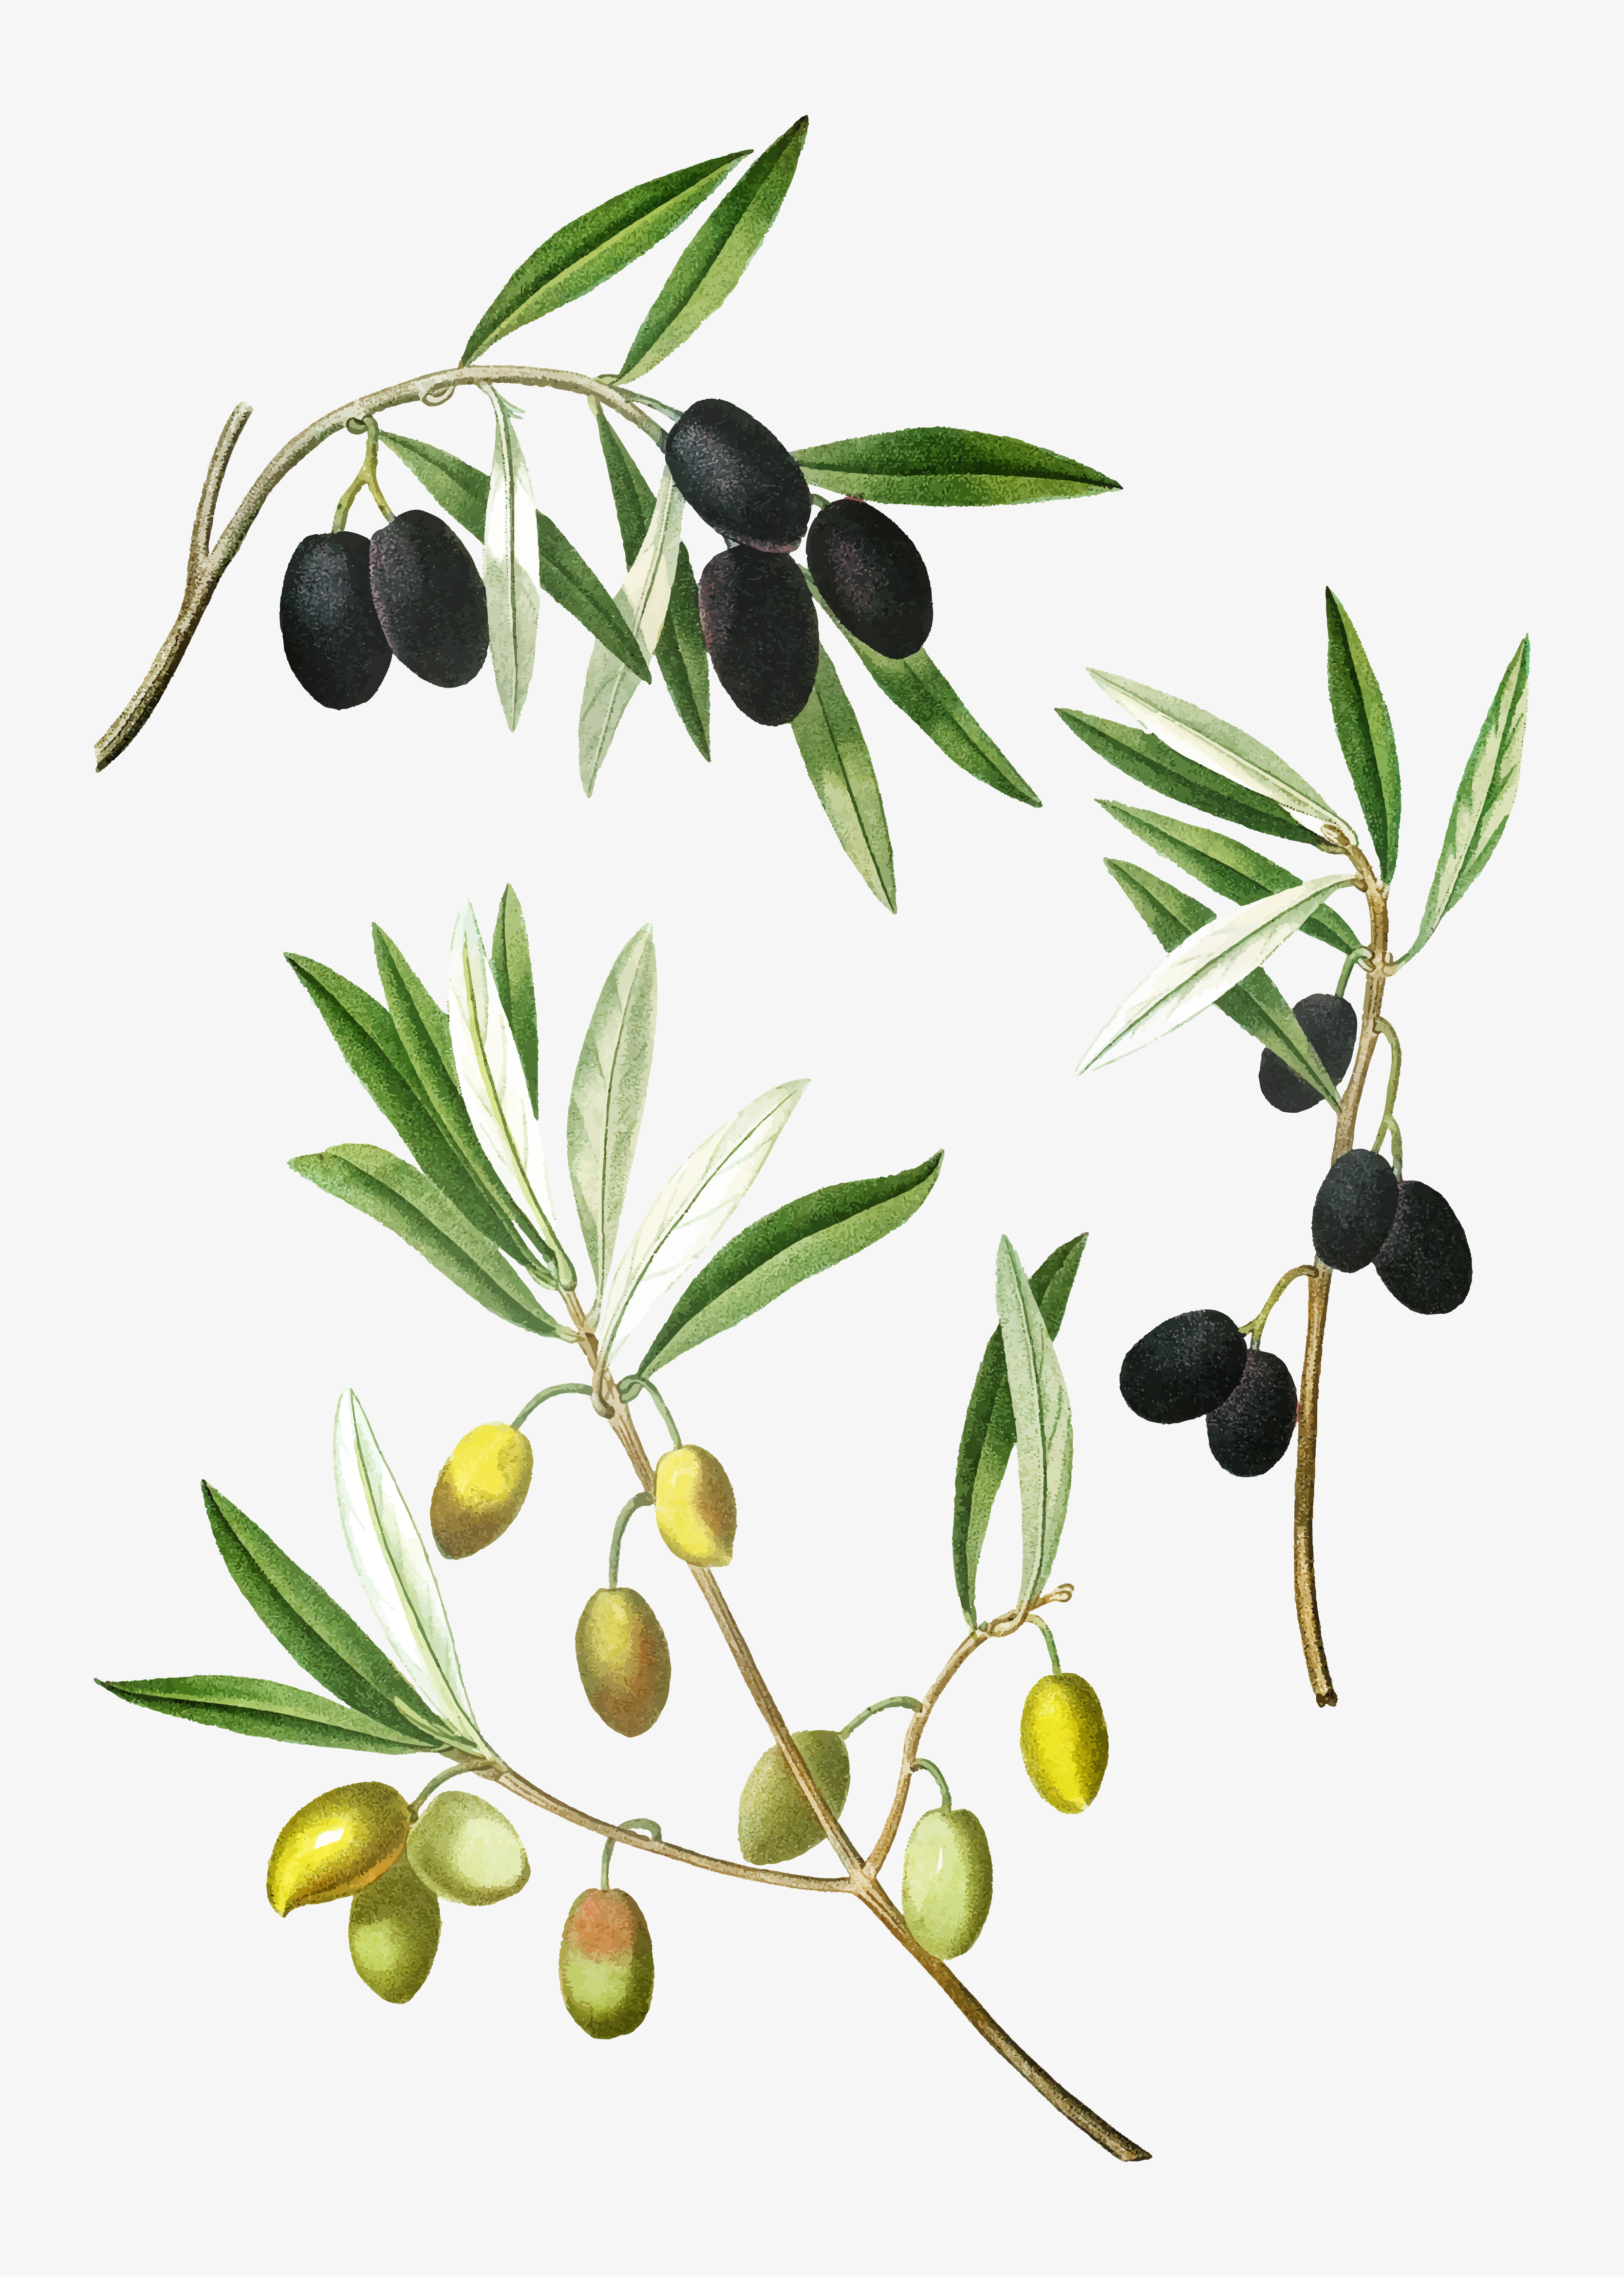 Olive tree branch - Download Free Vectors, Clipart Graphics & Vector Art